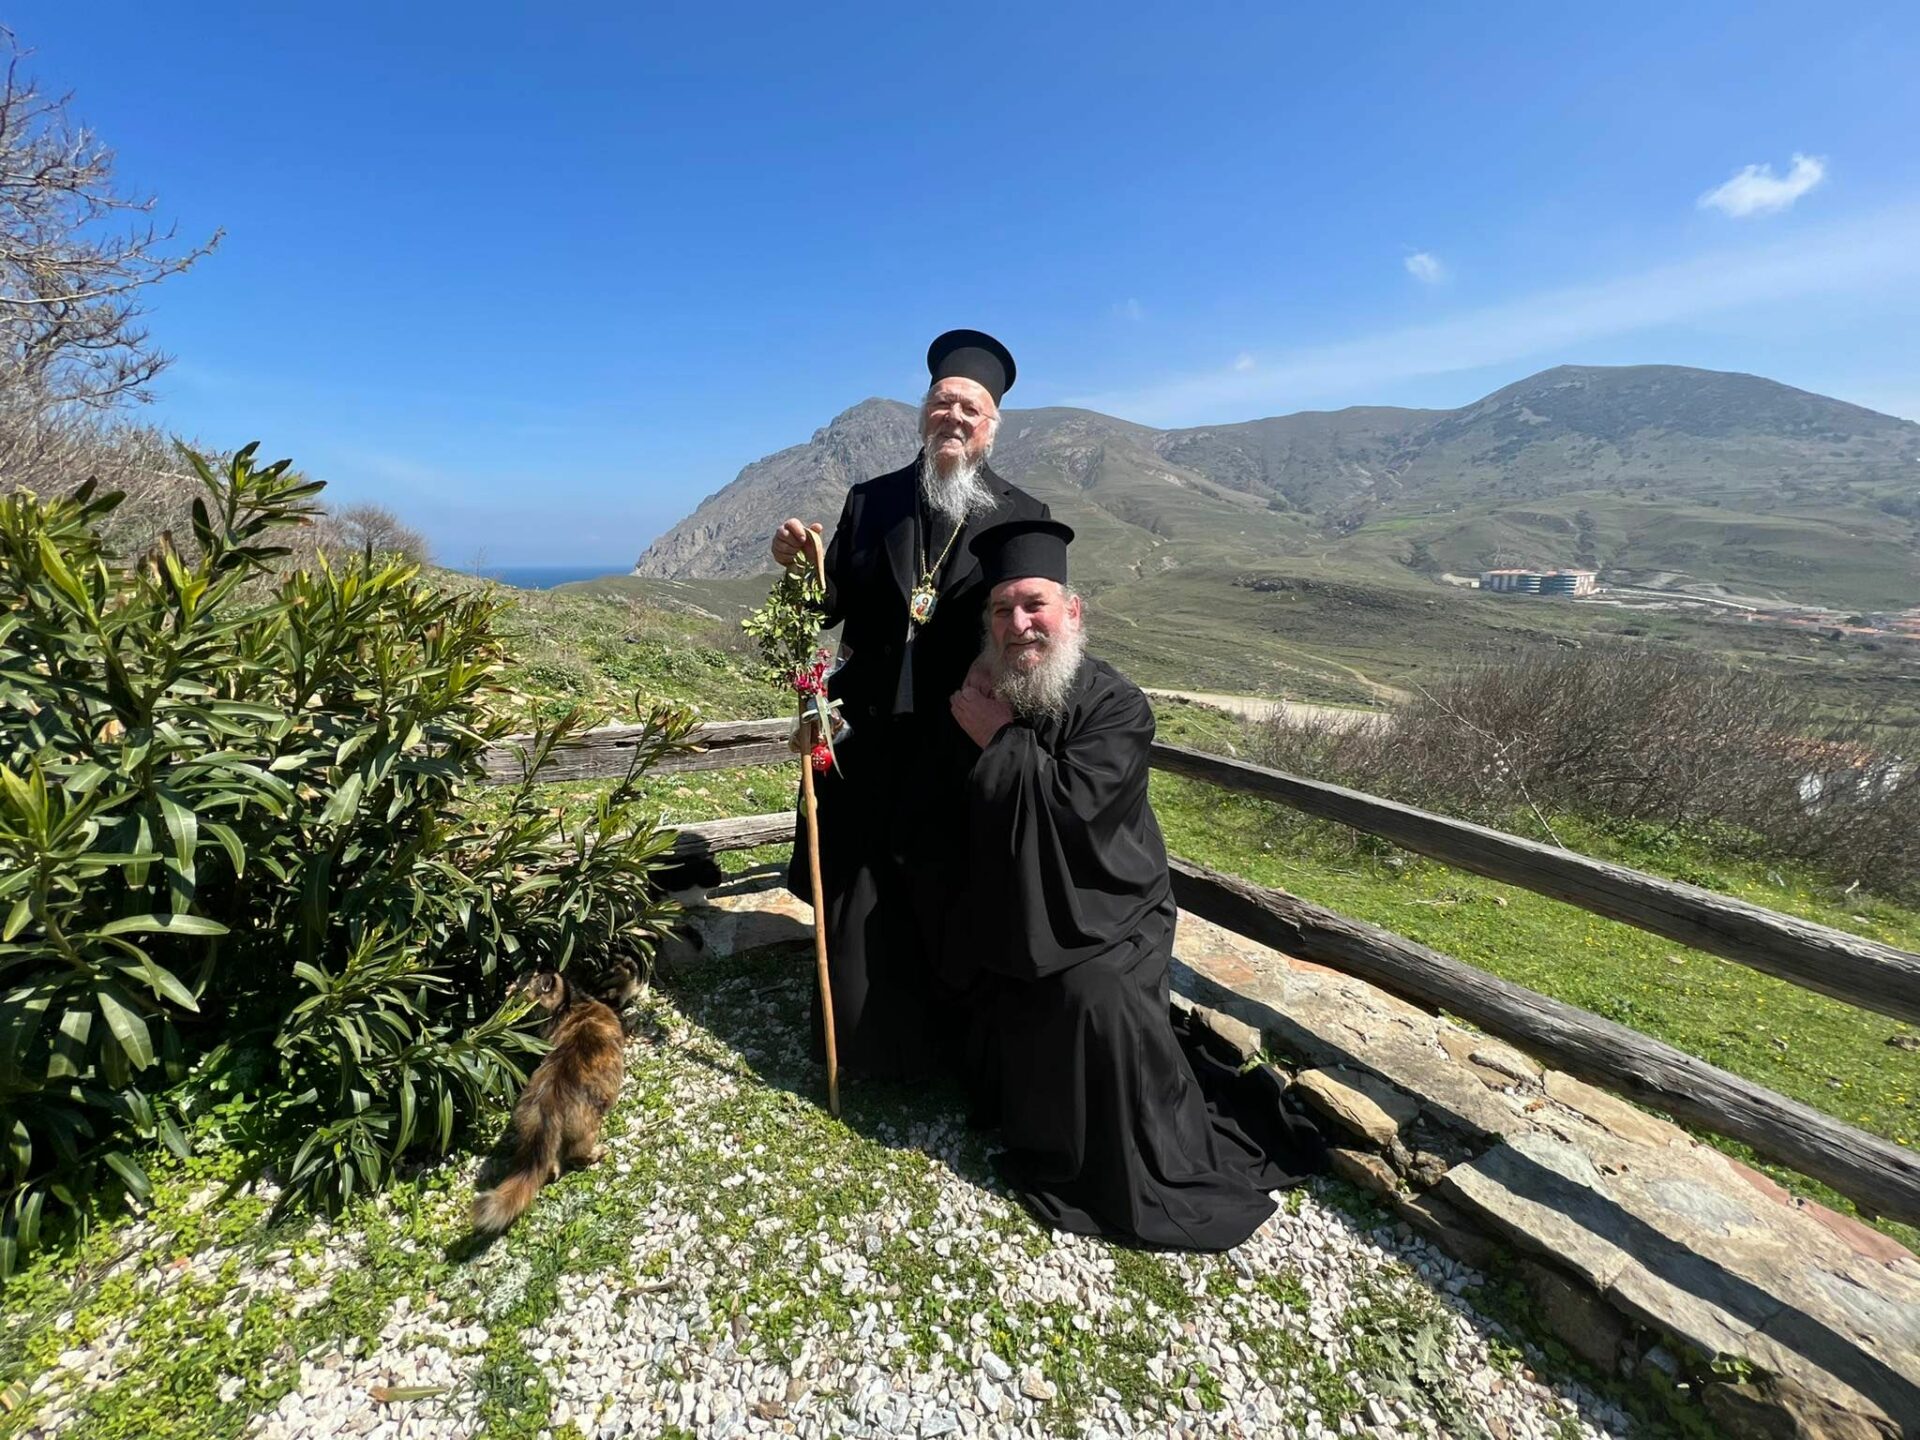 O Οικουμενικός Πατριάρχης στην ιδιαίτερη πατρίδα του, την Ίμβρο για το Πάσχα